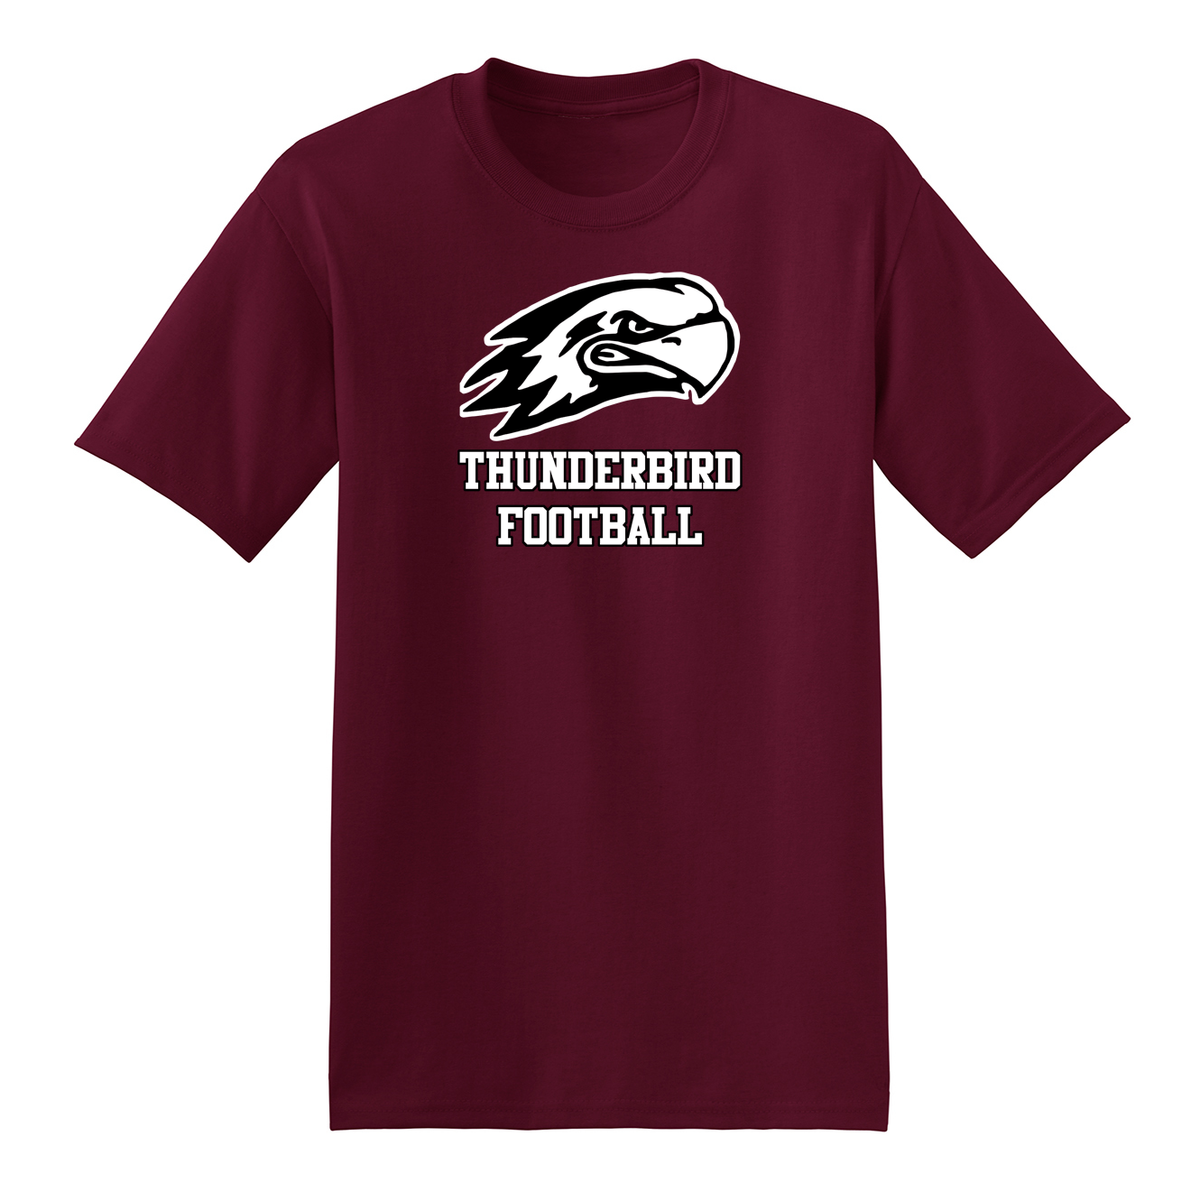 Chautuauqua Lake Football T-Shirt